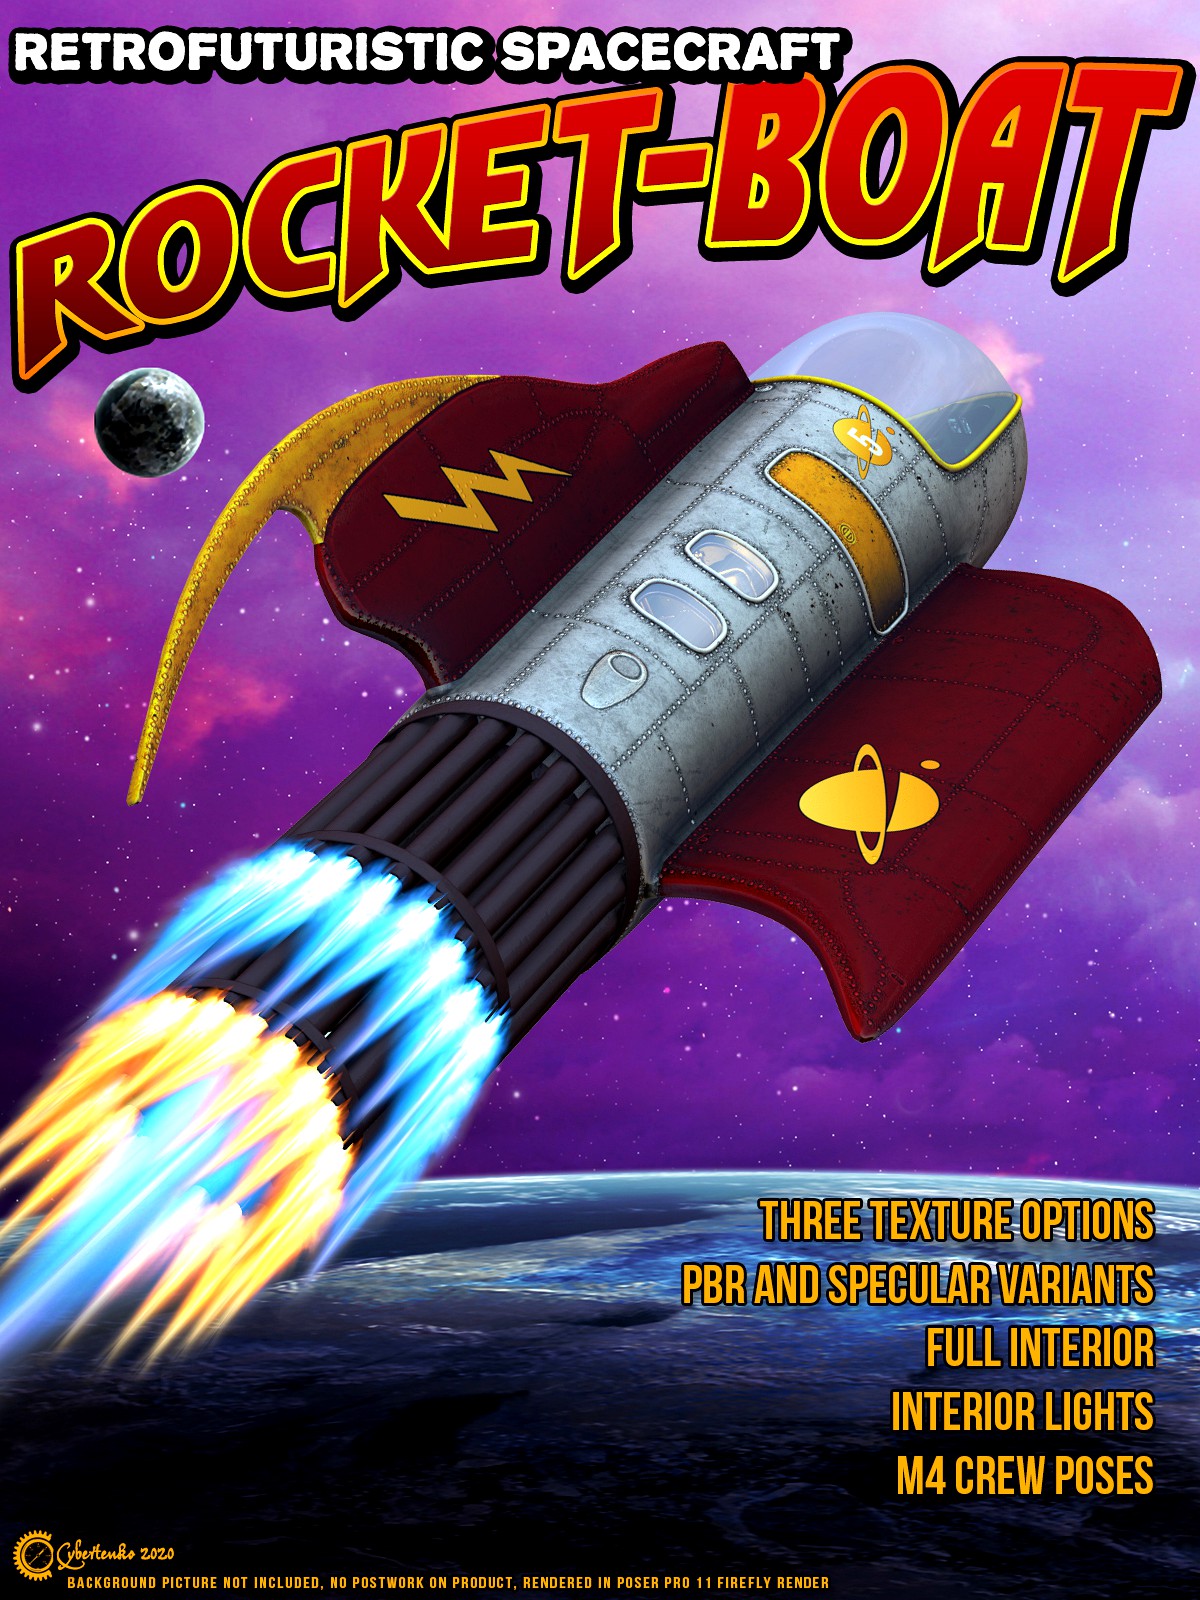 Rocket-Boat